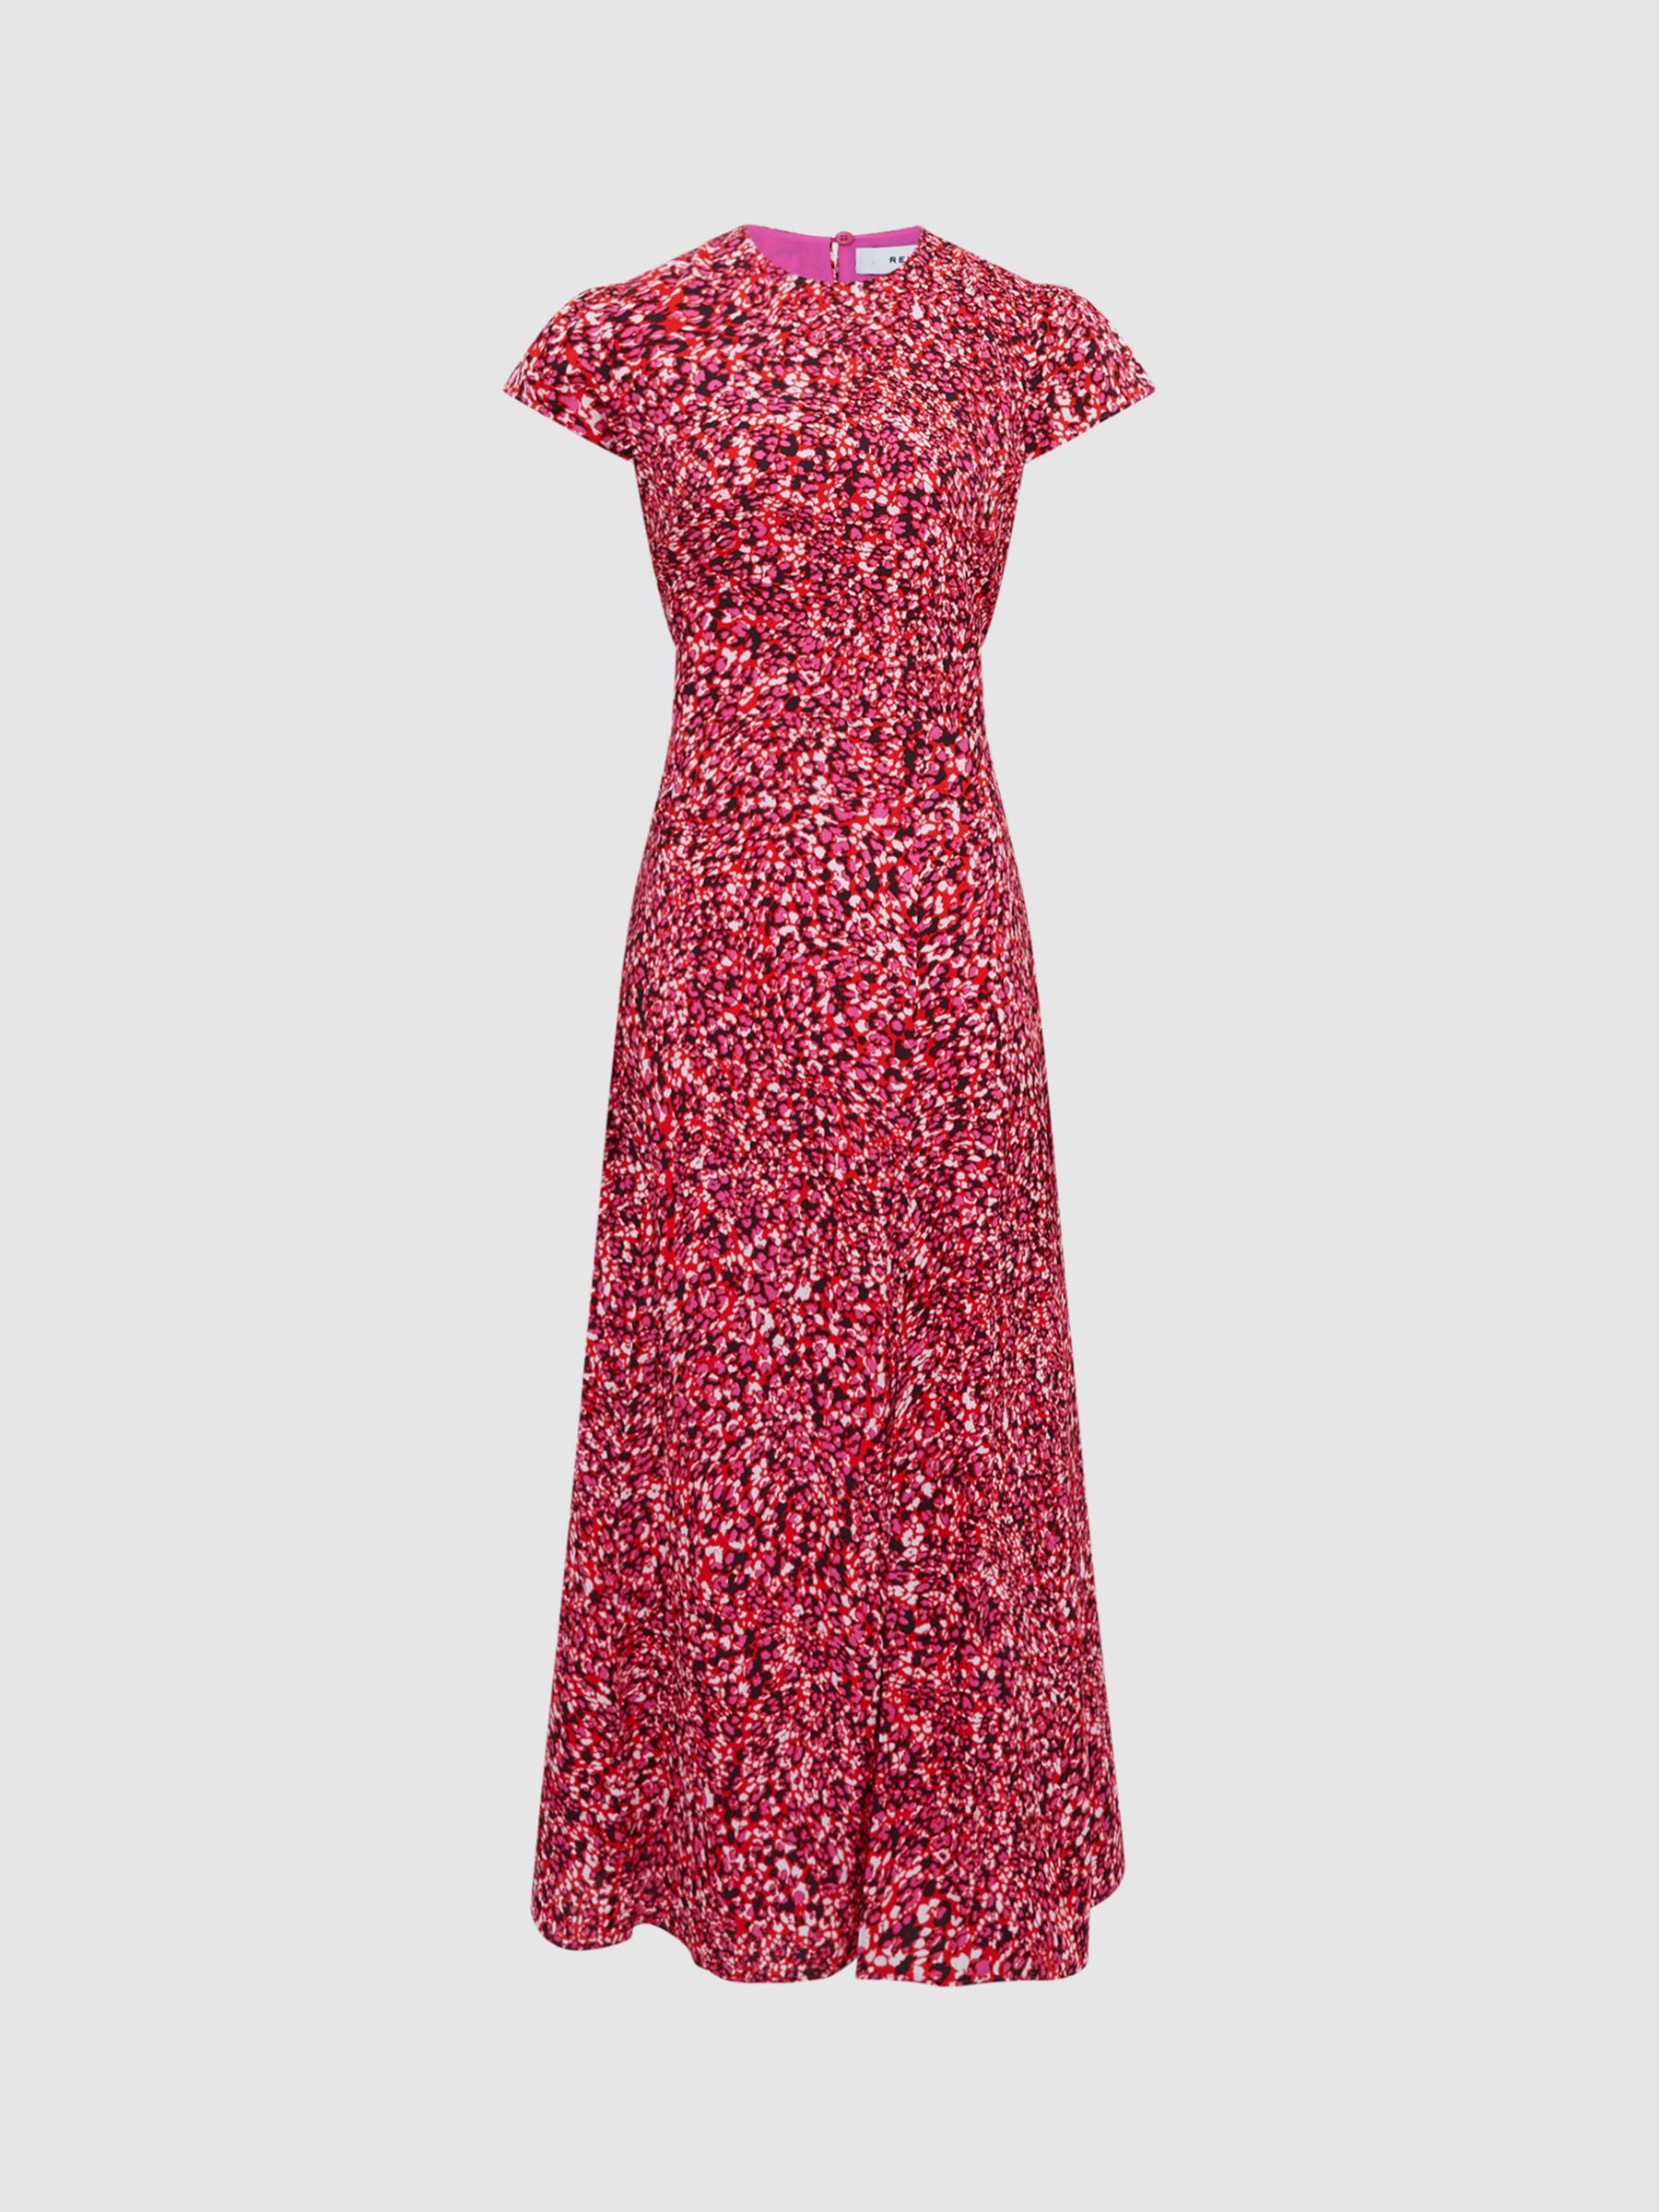 Reiss Livia Floral Midi Dress, Red/Multi, 6